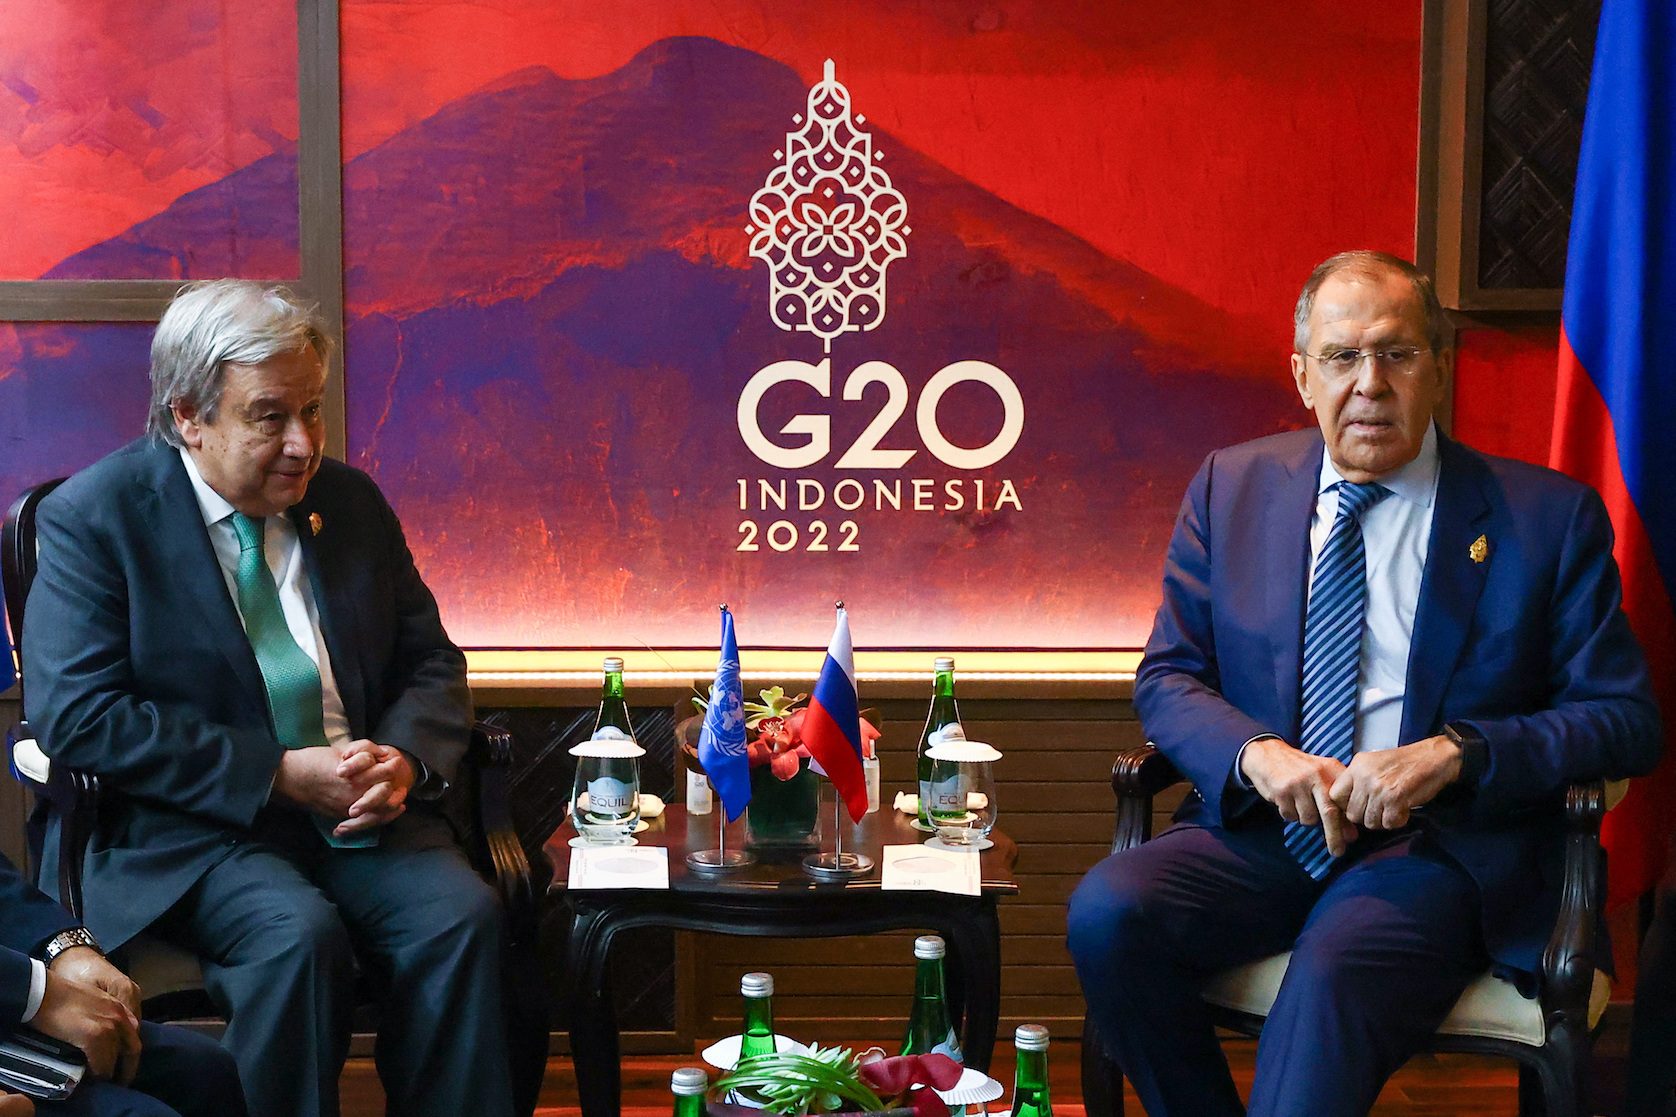 Lavrov at G20: UN says it has US and EU guarantees on export of Russian grain, fertilizers